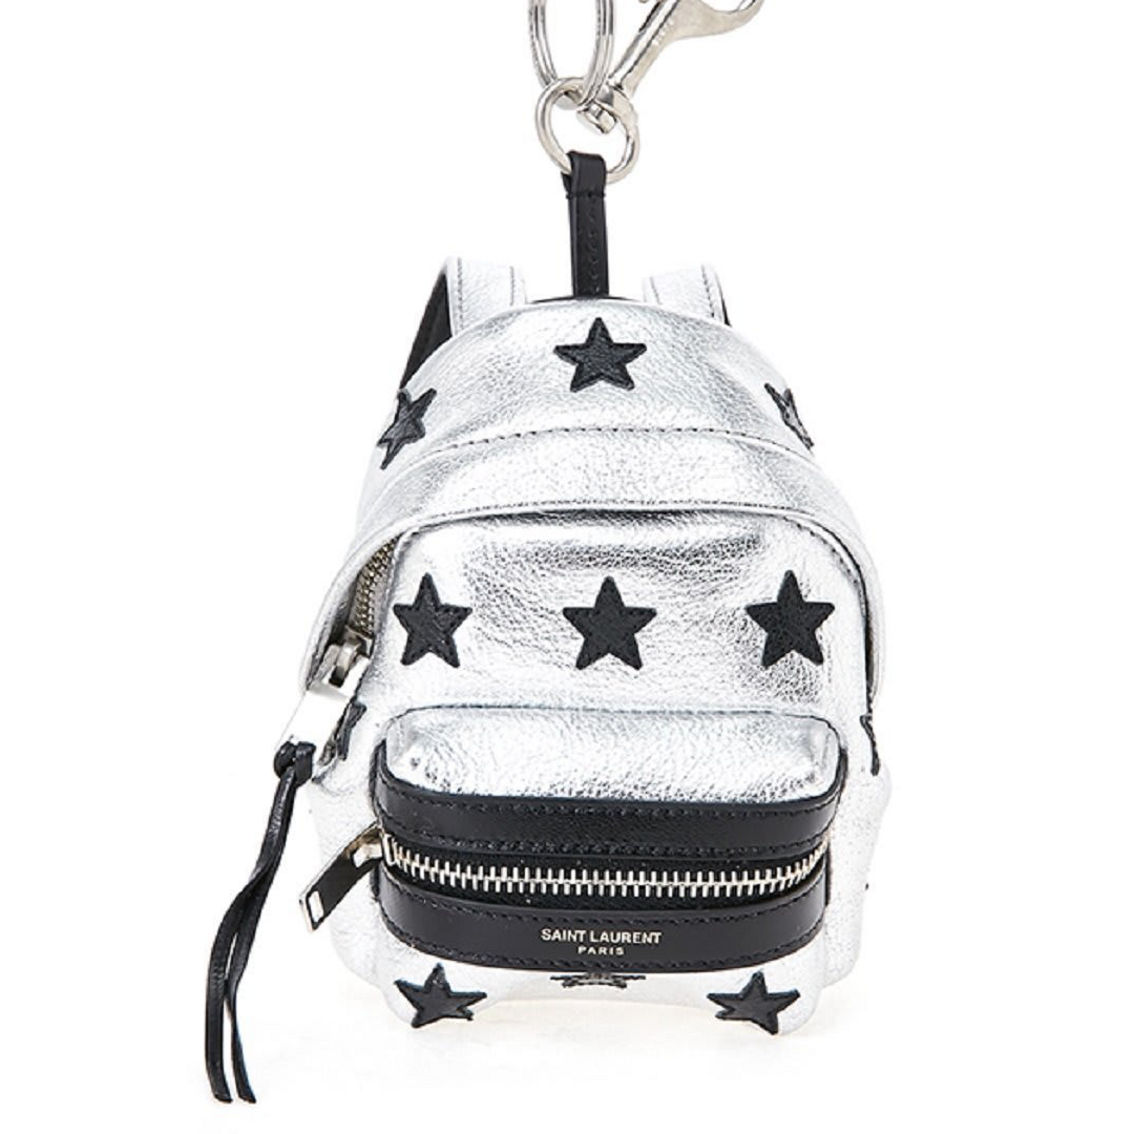 Saint Laurent Silver/Black Unisex Zip Backpack Key Chain Black Stars (New) - Image 3 of 5